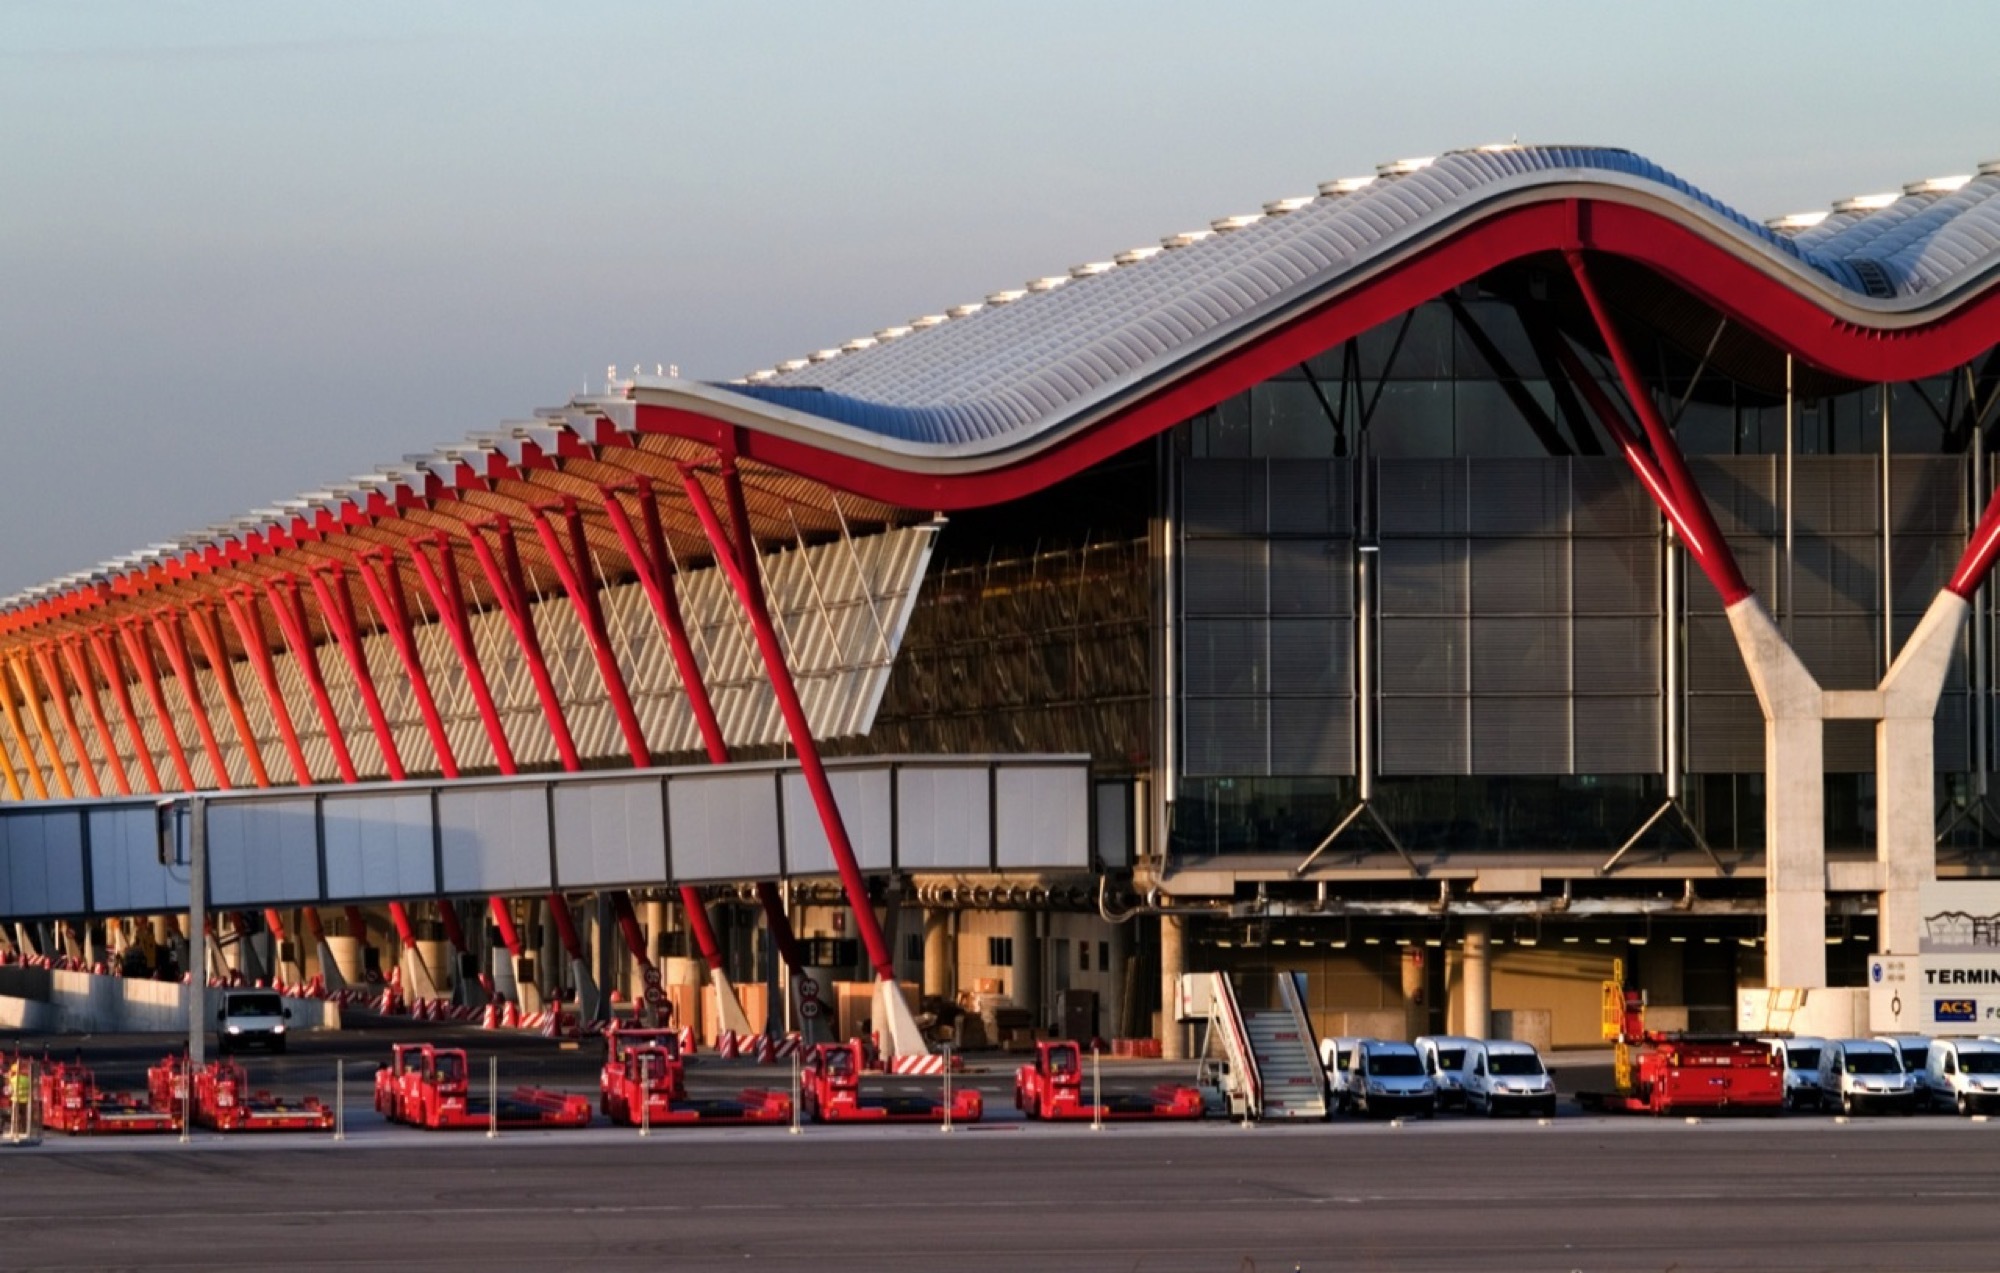 馬德里巴拉哈斯機場 Terminal 4, Barajas Airport╱Rogers Stirk Harbour + Partners